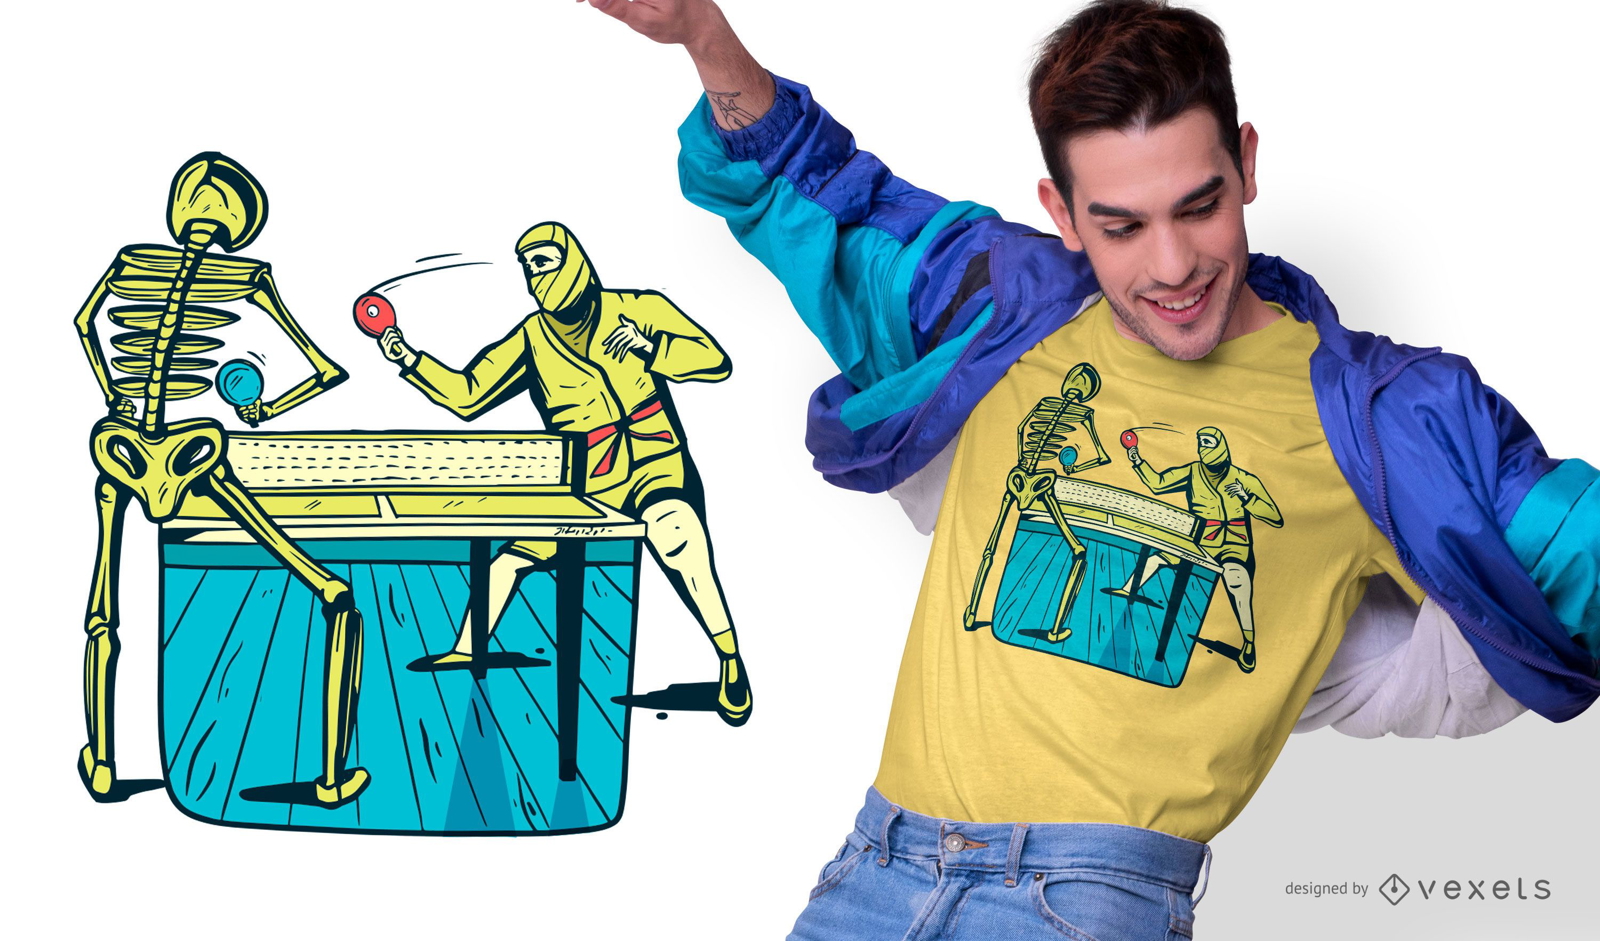 Table Tennis Skeleton T-shirt Design